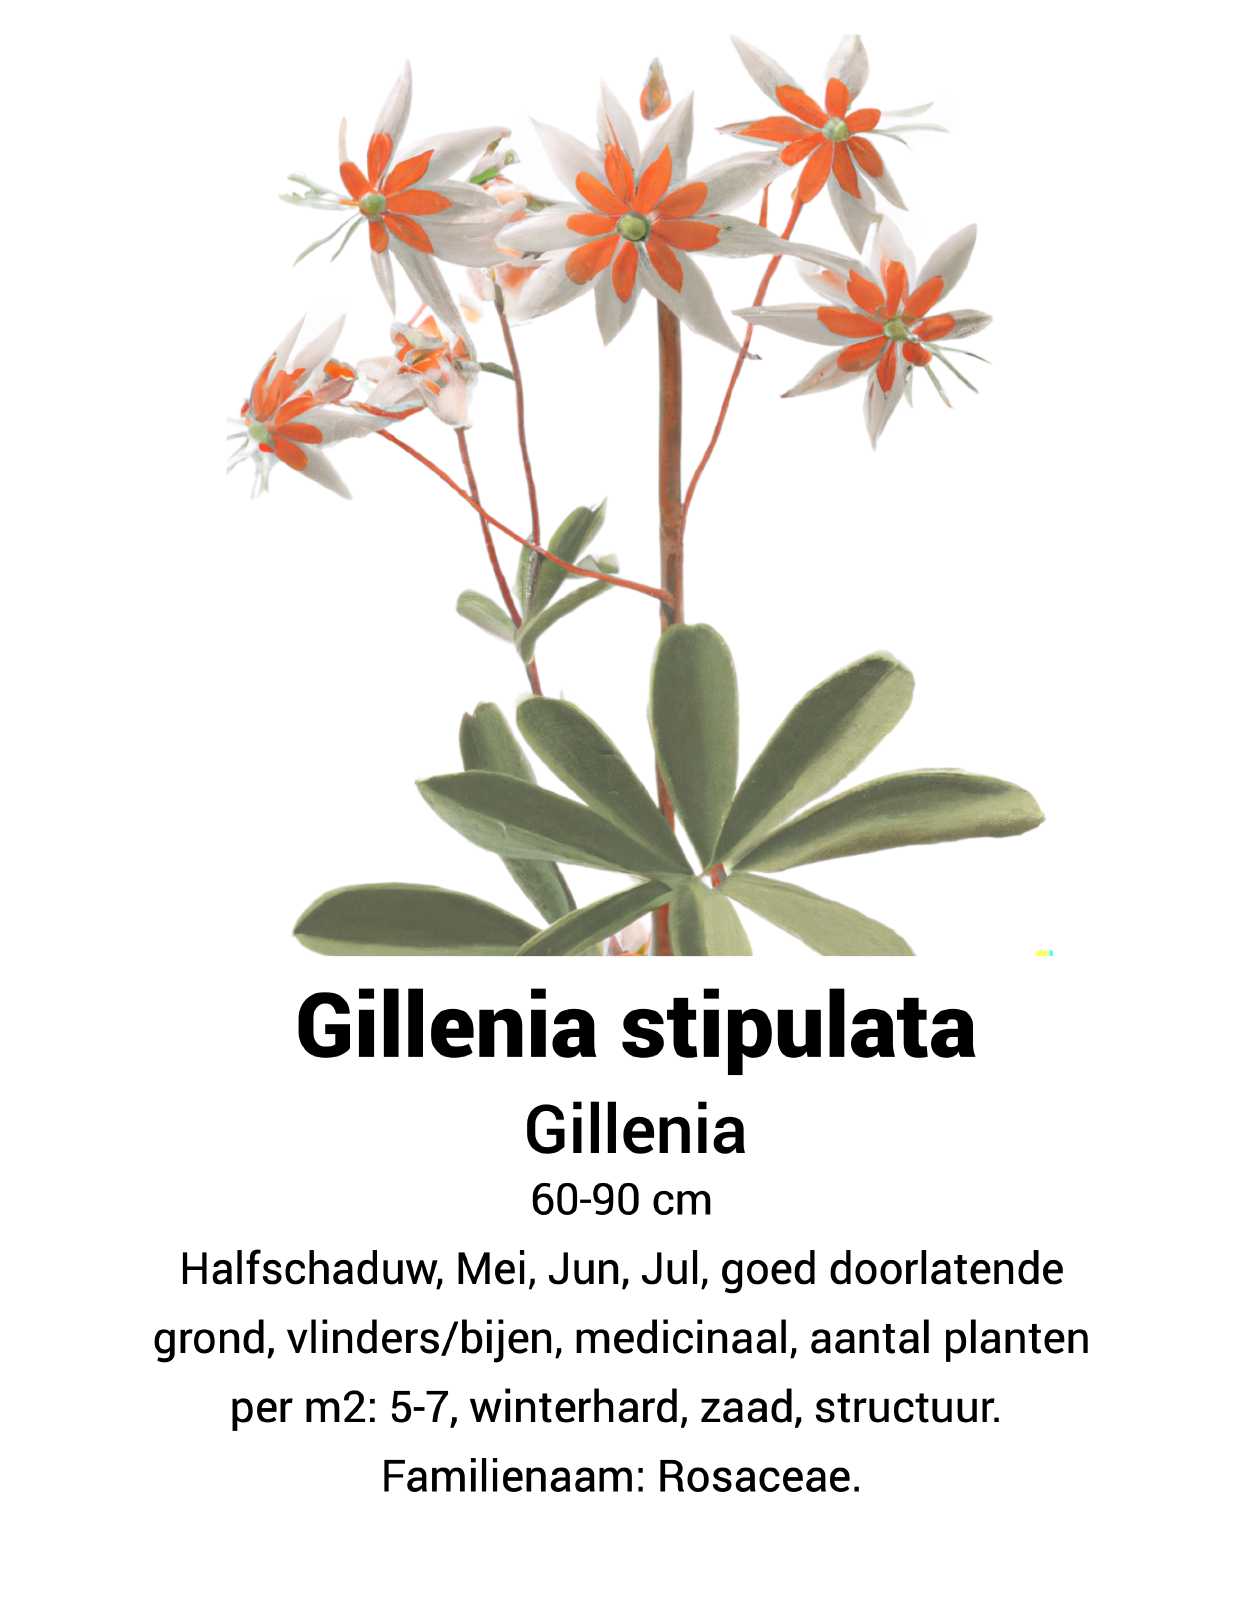 rest-website/gillenia-stipulata.png